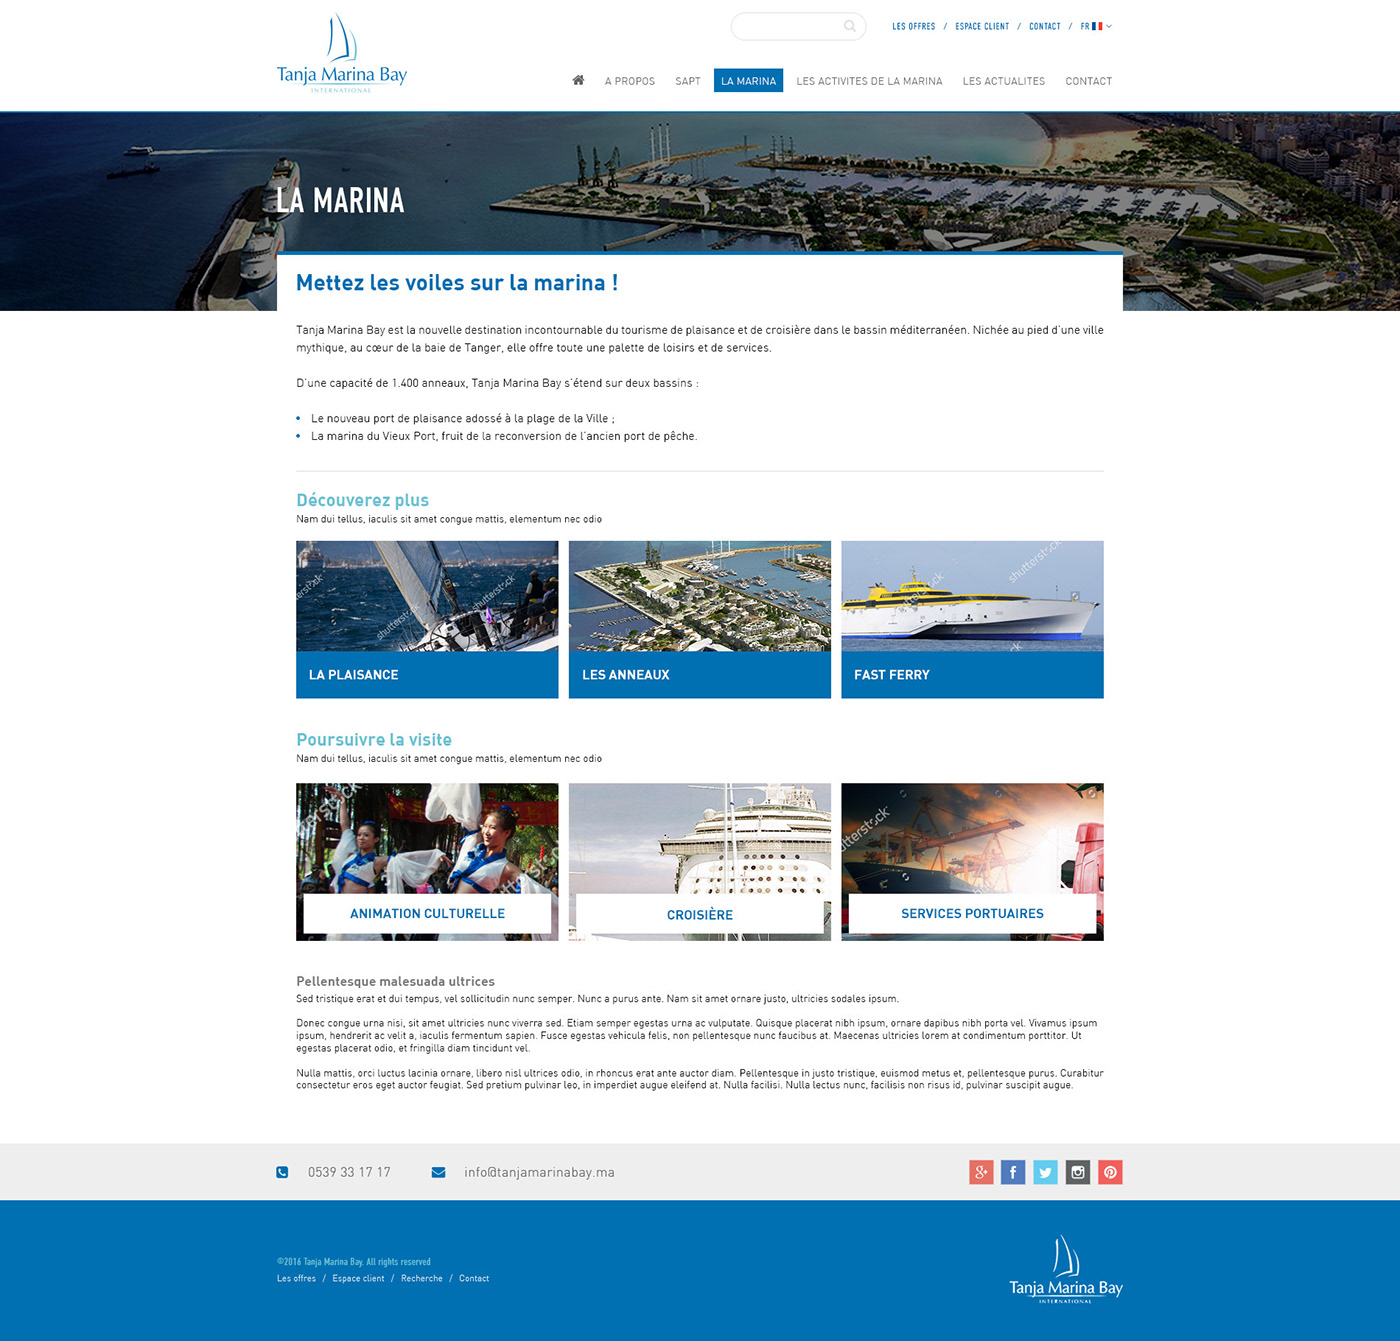 Tanja Marina Bay tangier Morocco Website